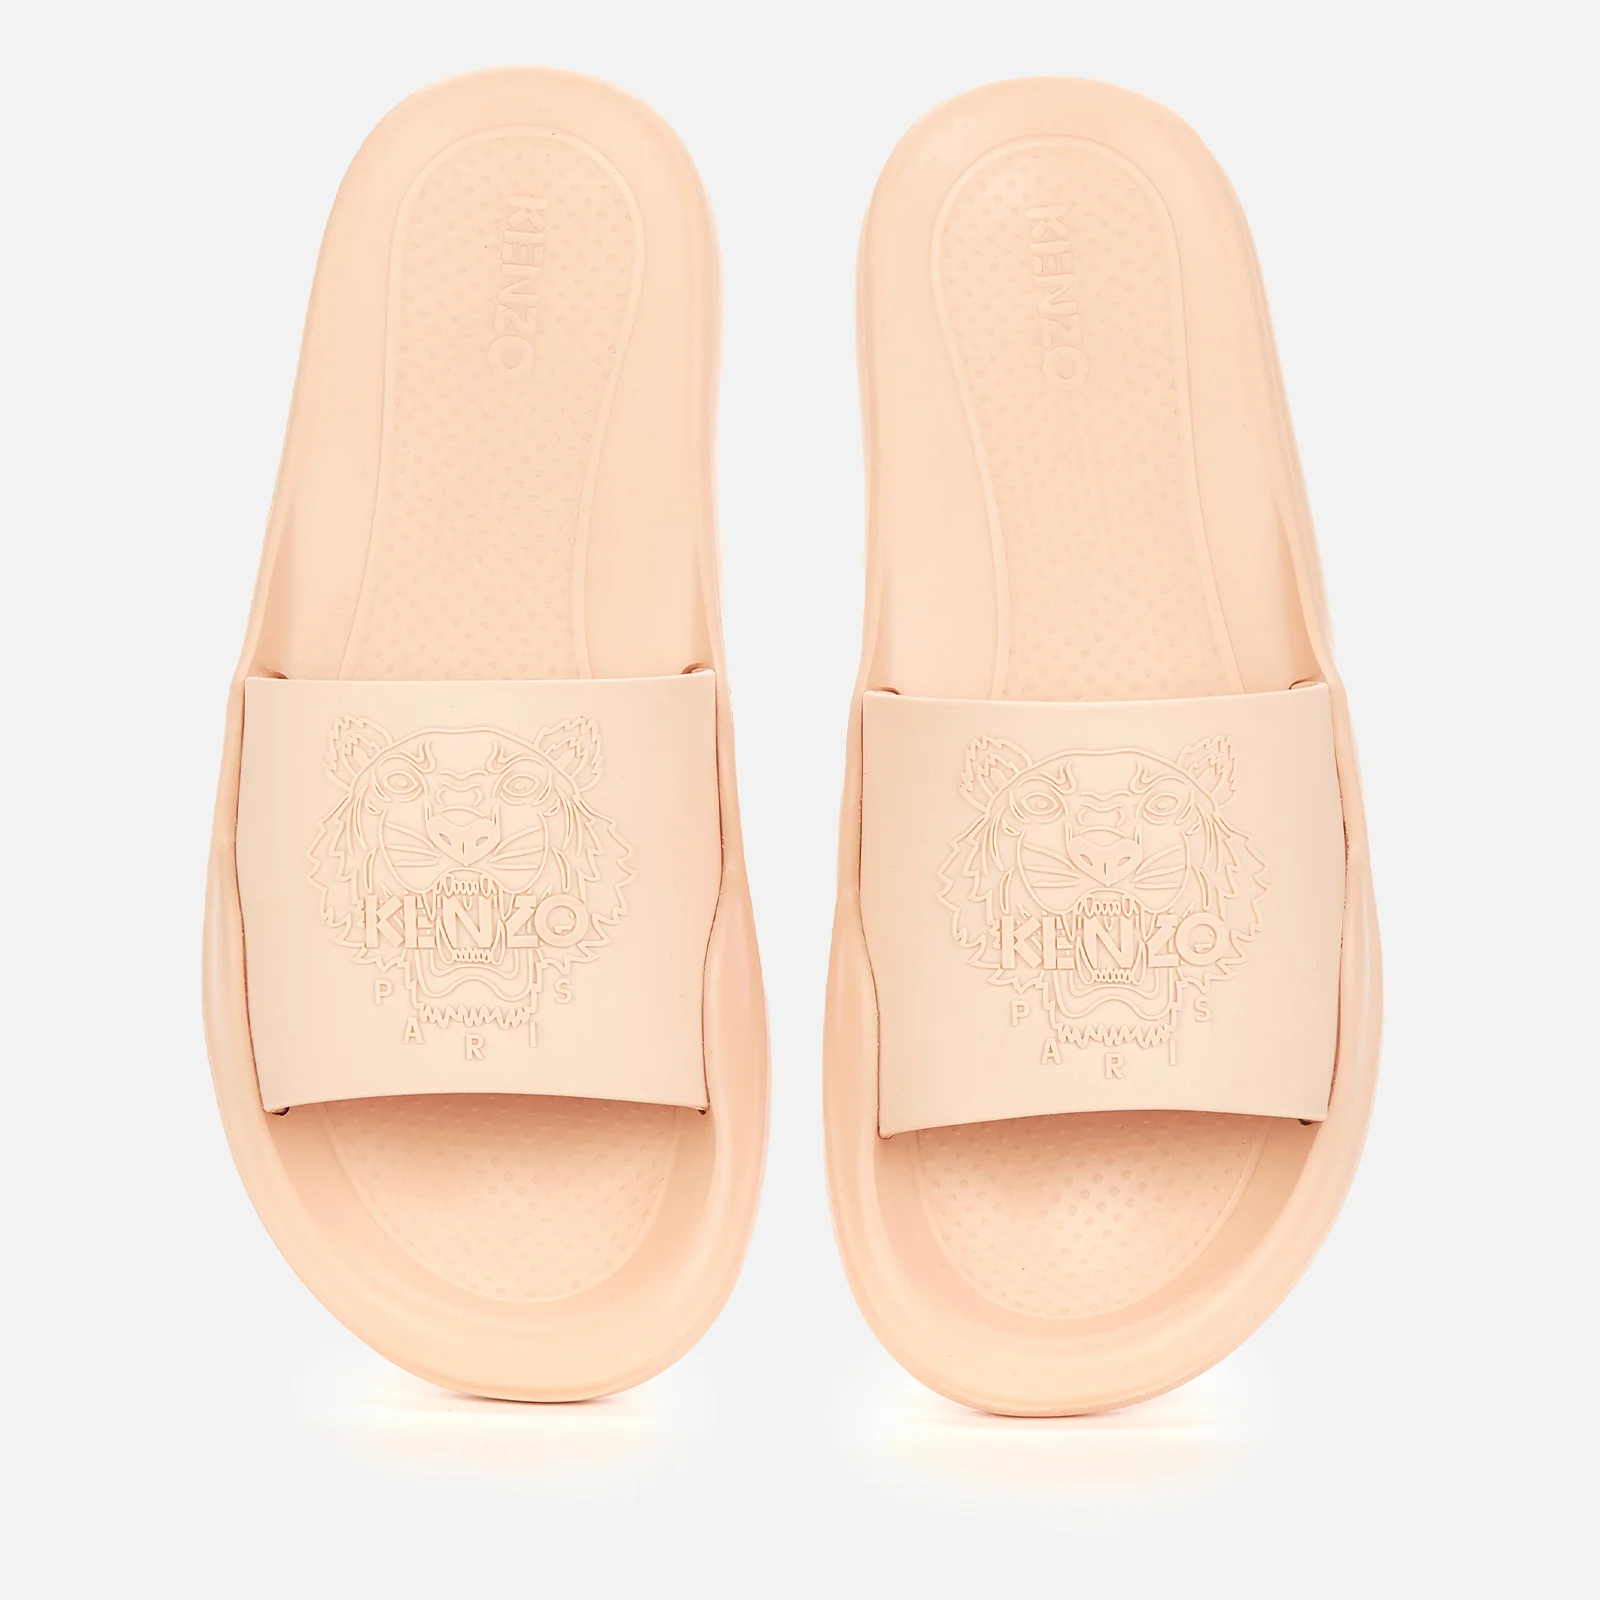 KENZO Women's Tiger Slide Sandals - Peach Image 1